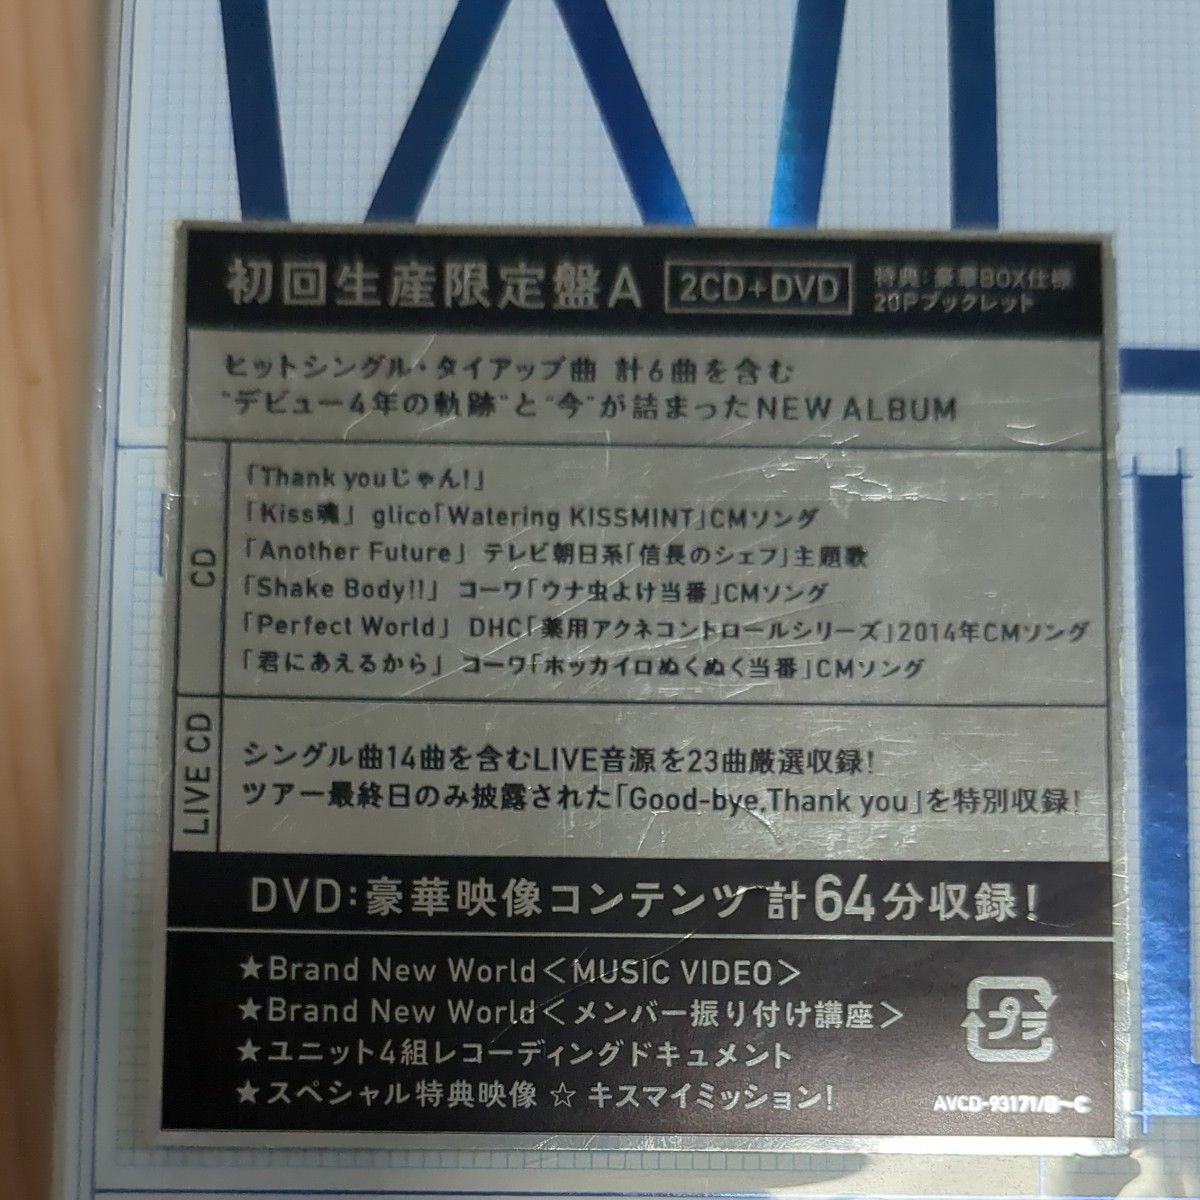 KIS-MY-WORLD (初回生産限定盤A) (CD2枚+DVD) (LIVE CD盤)